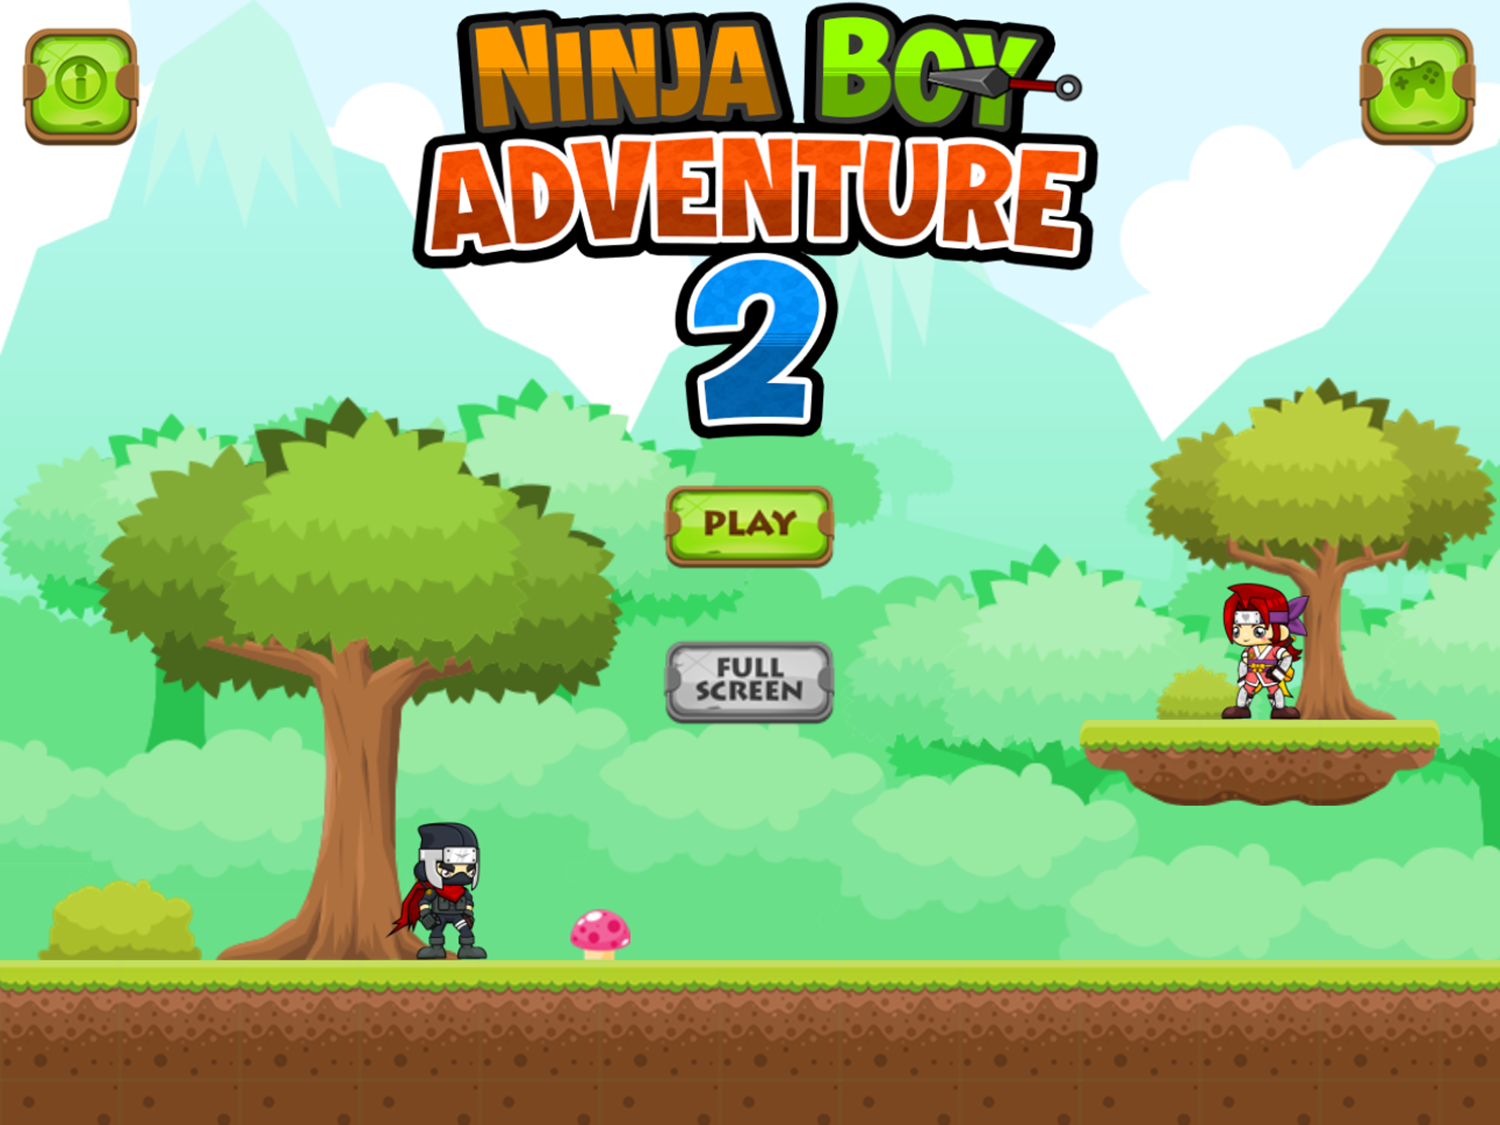 Ninja Boy Adventure 2 Game Welcome Screen Screenshot.